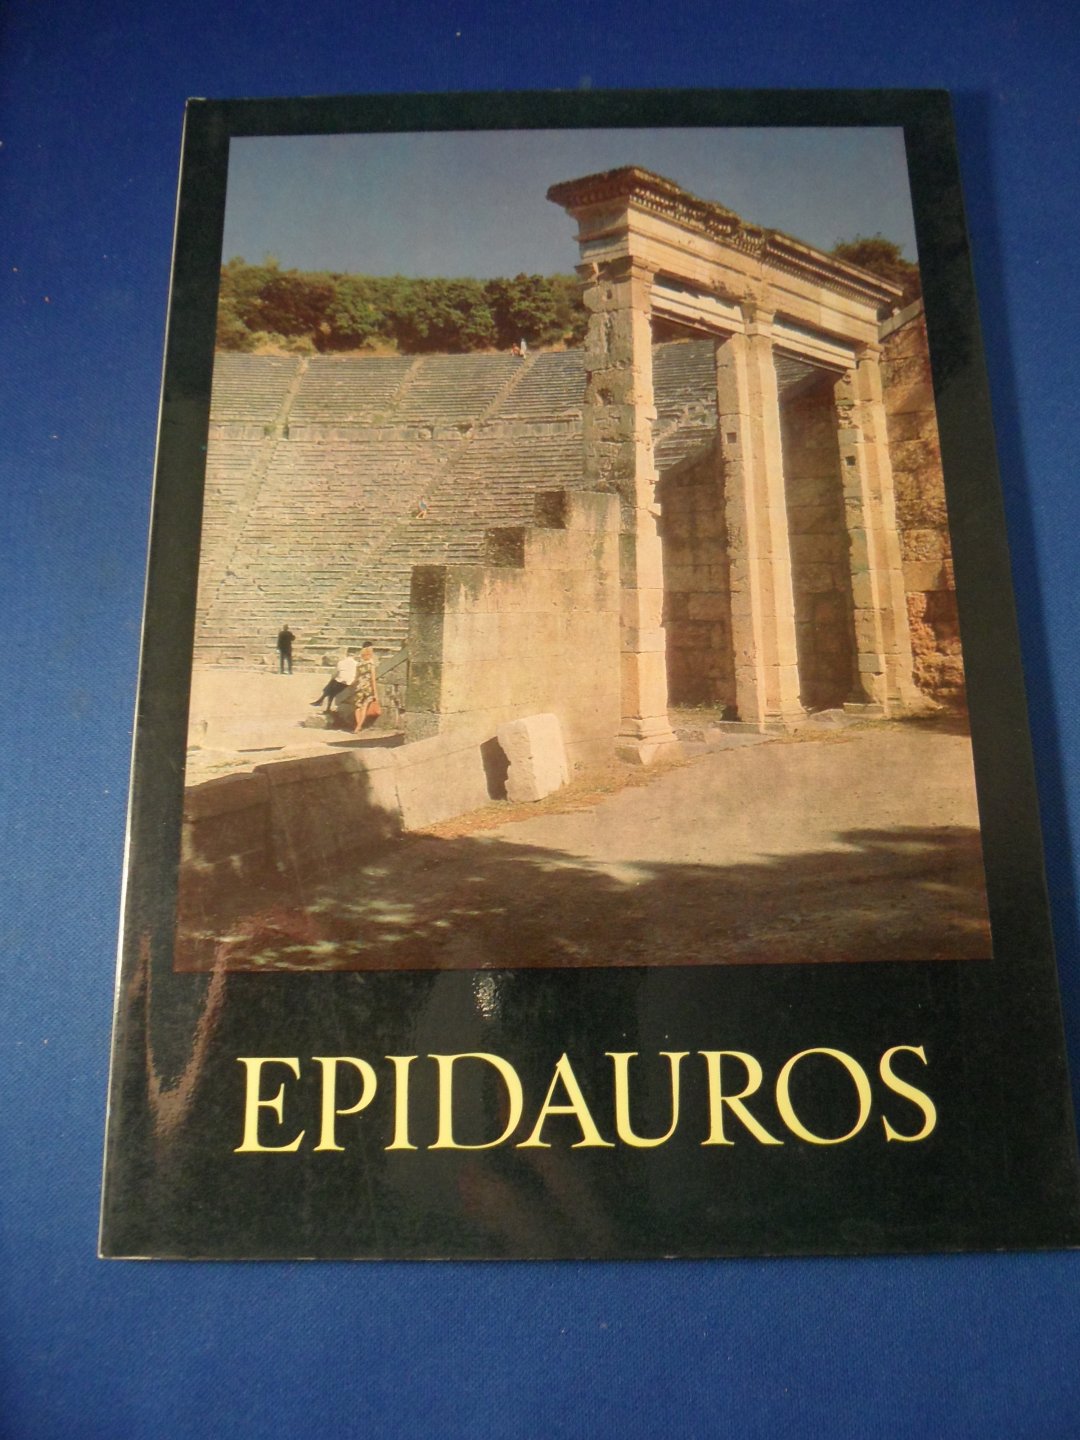 Papadakis, Theodoros - Epidauros